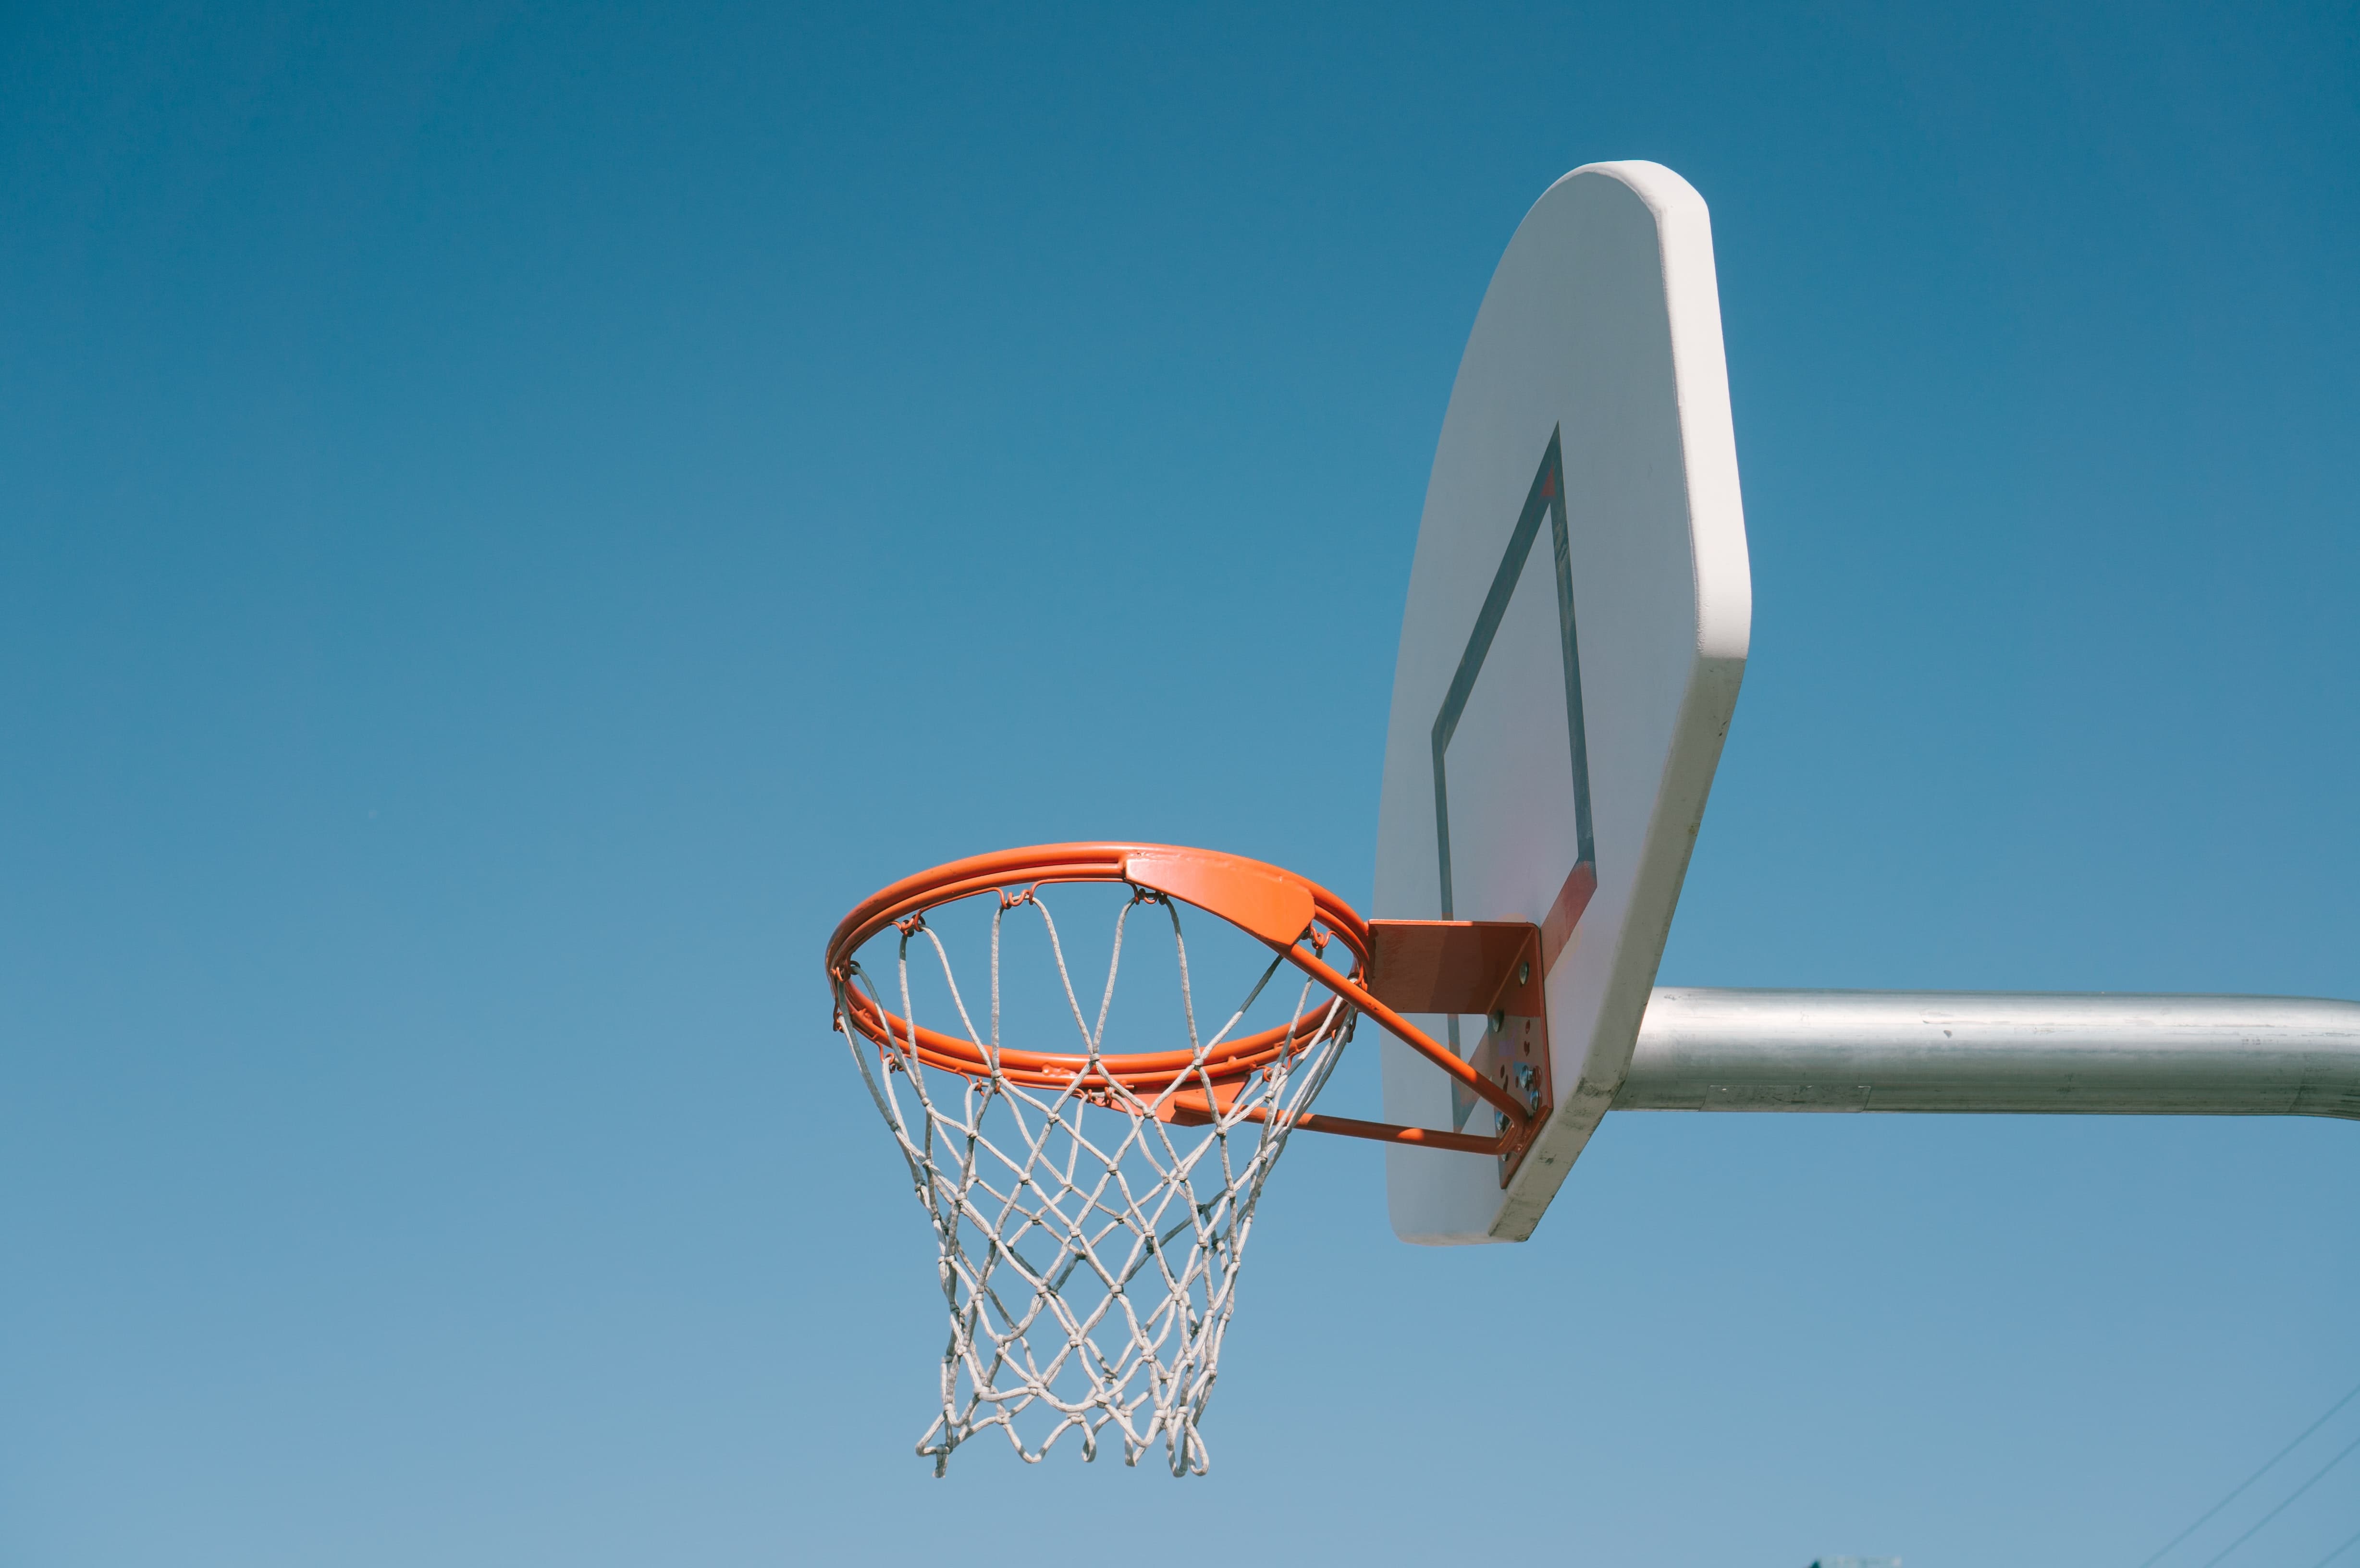 single basketball hoop and backboard against a blue sky 